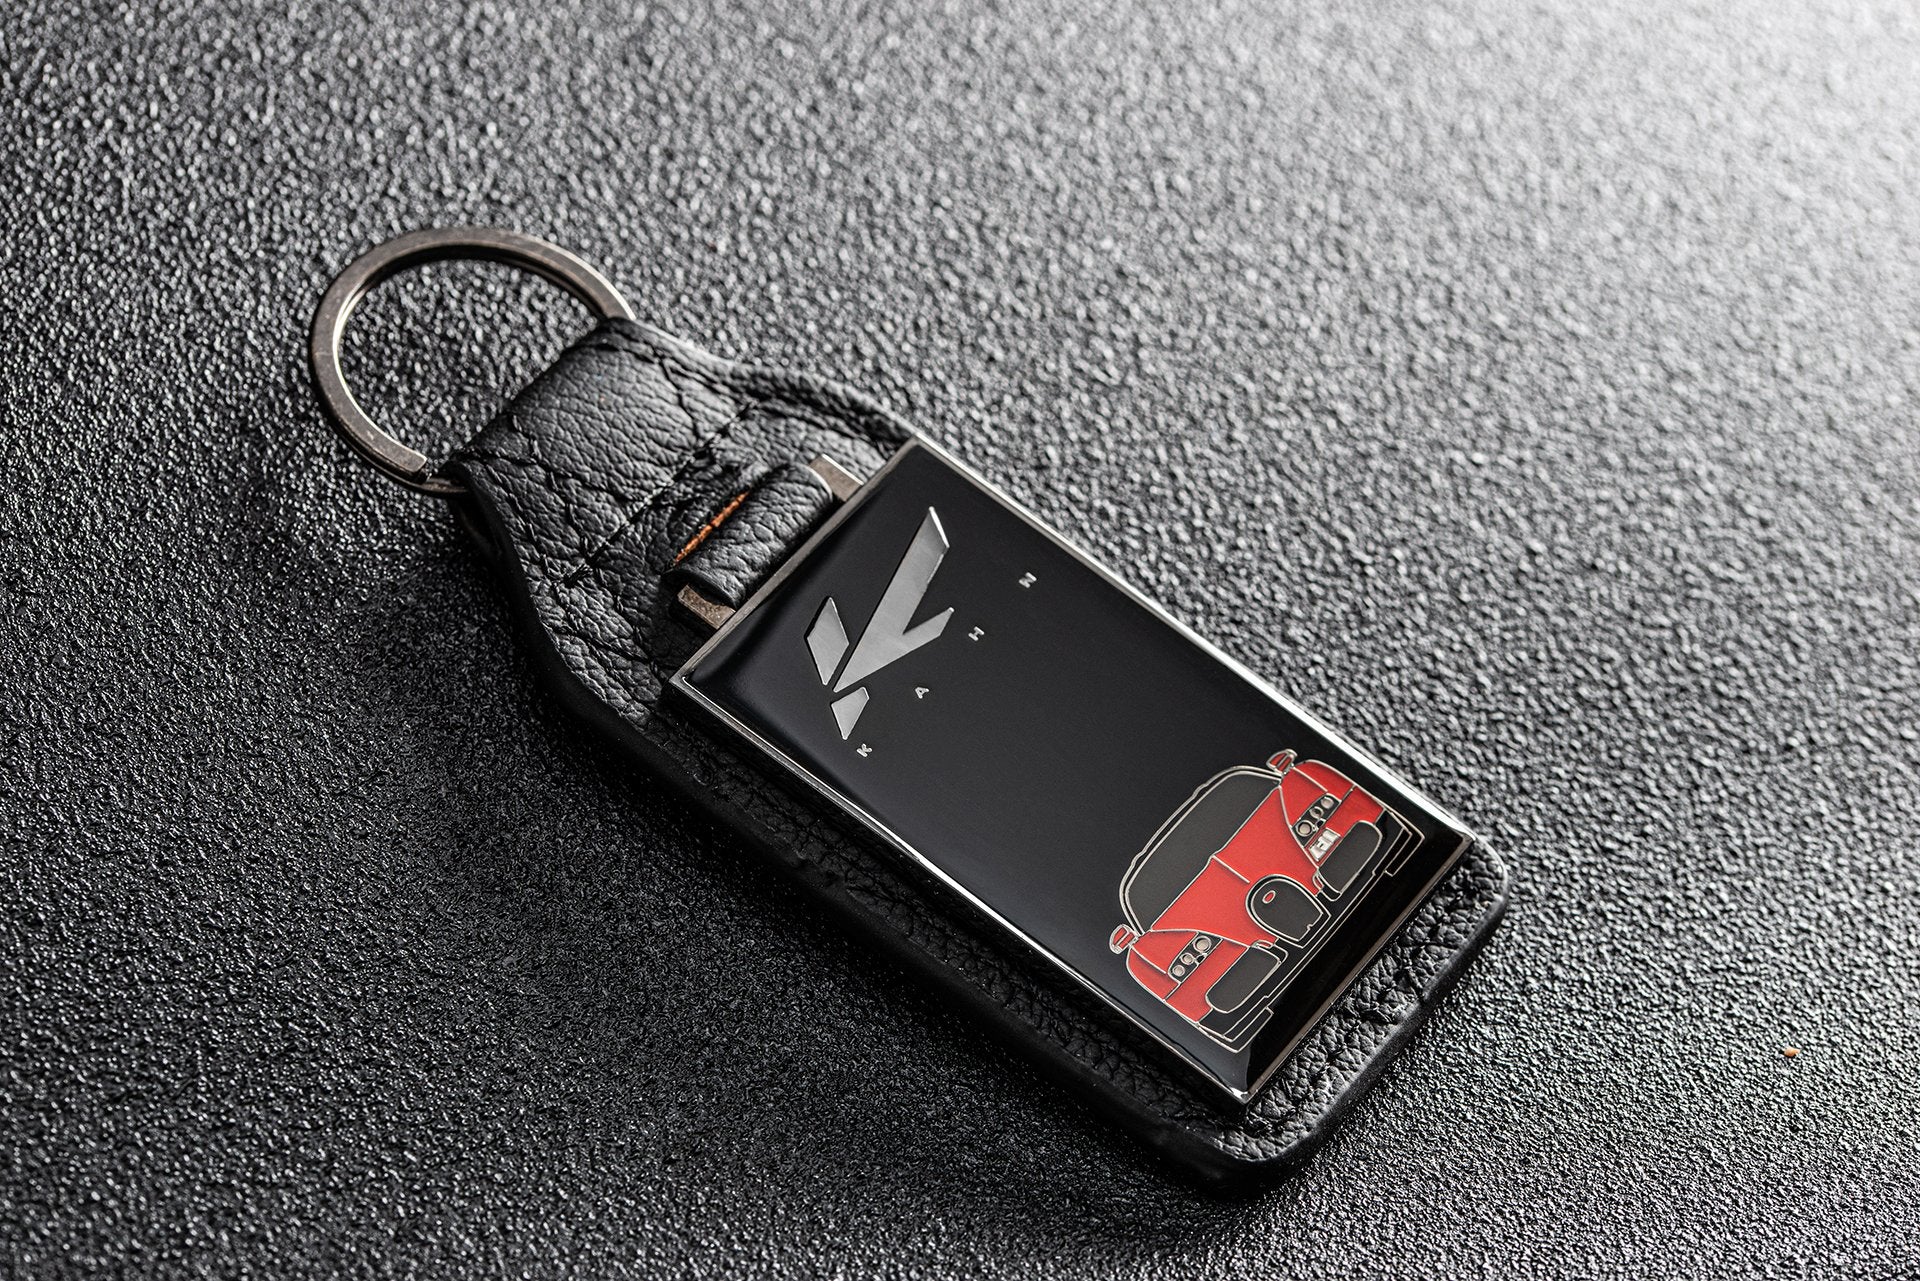 MAZDA key fob, keychain black leather :: capforwheel